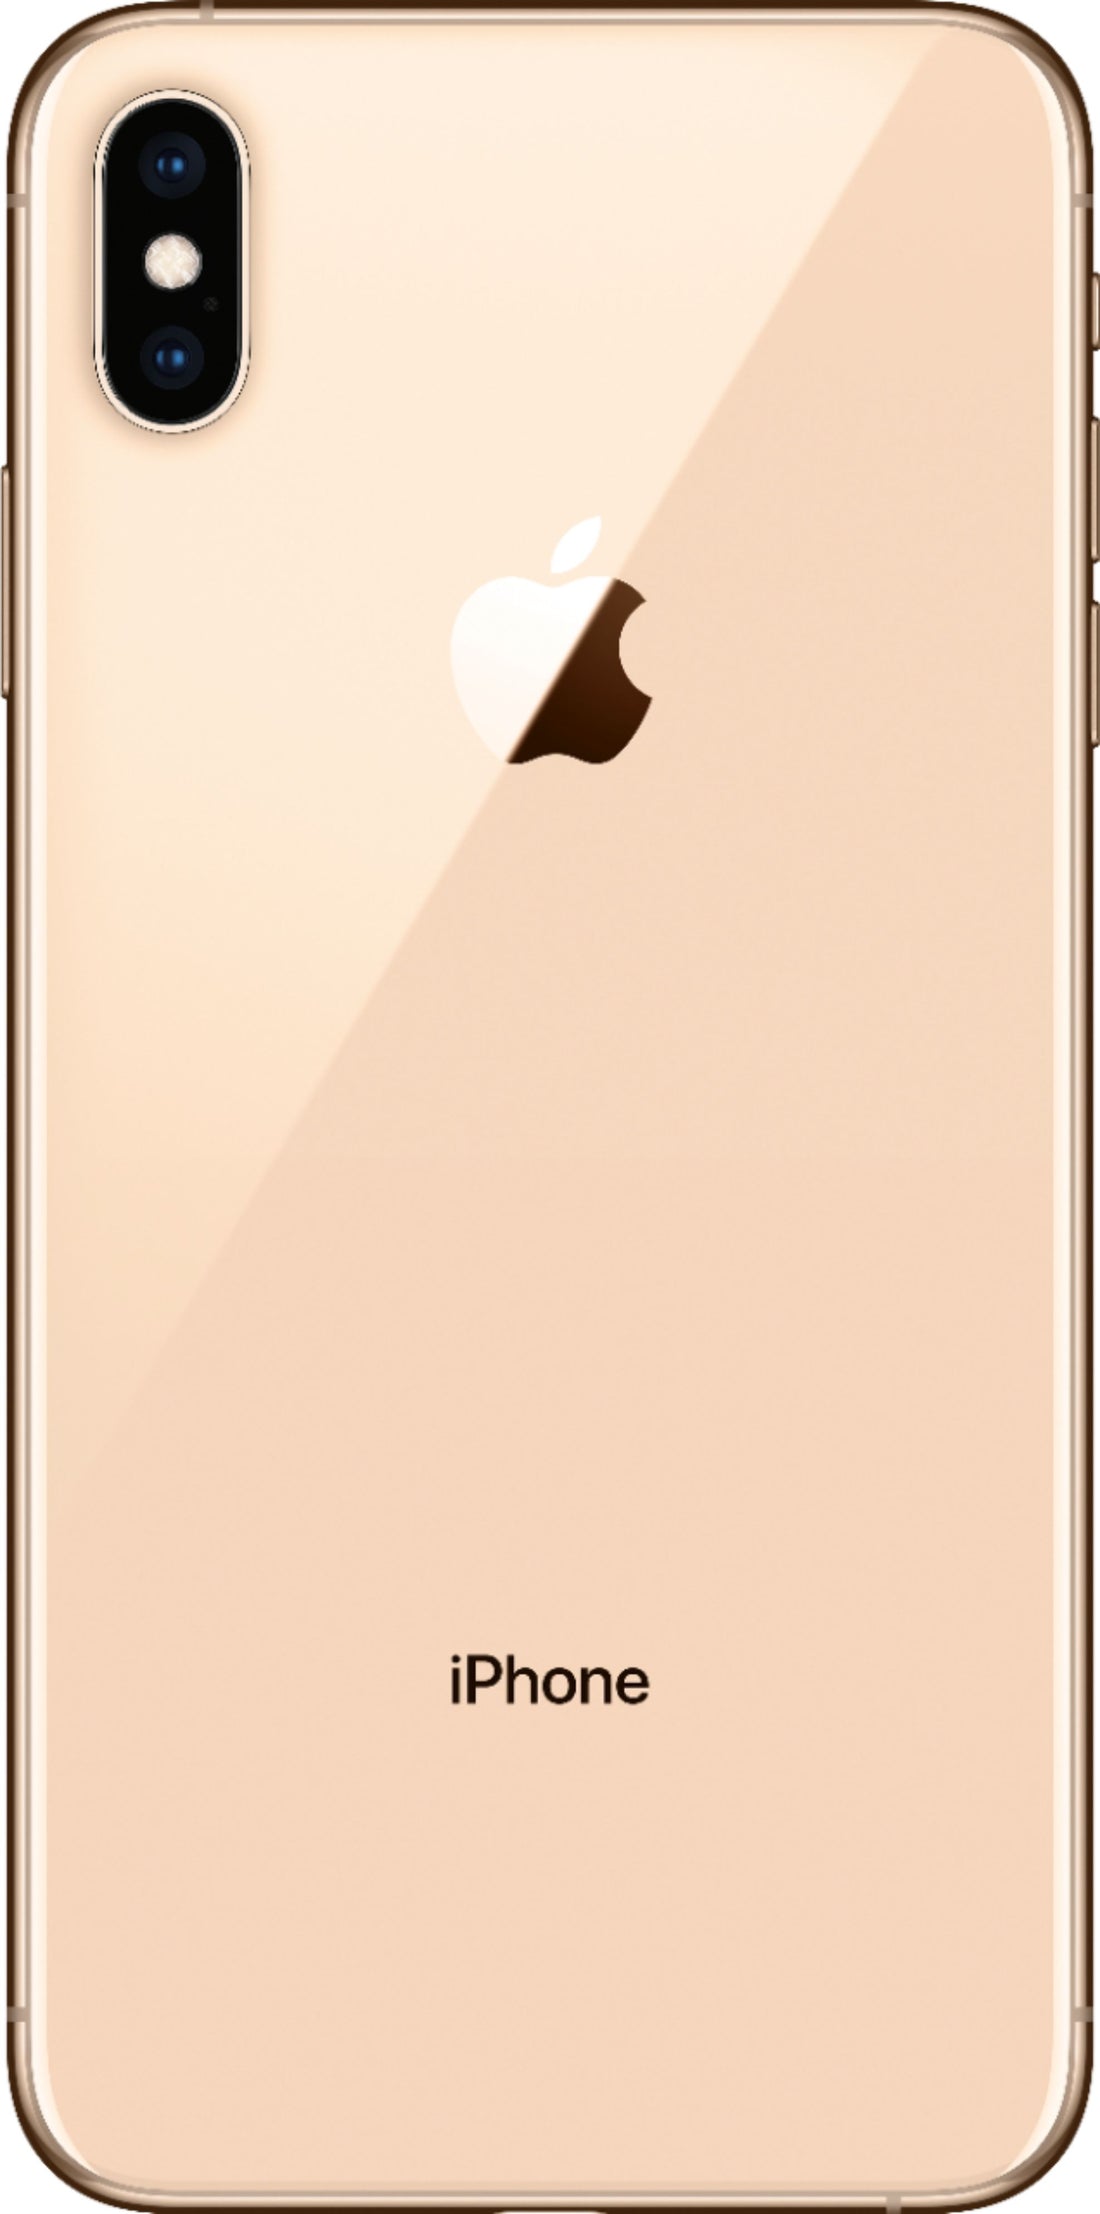 Apple iPhone XS Max 512GB (Unlocked) - Gold (Refurbished)